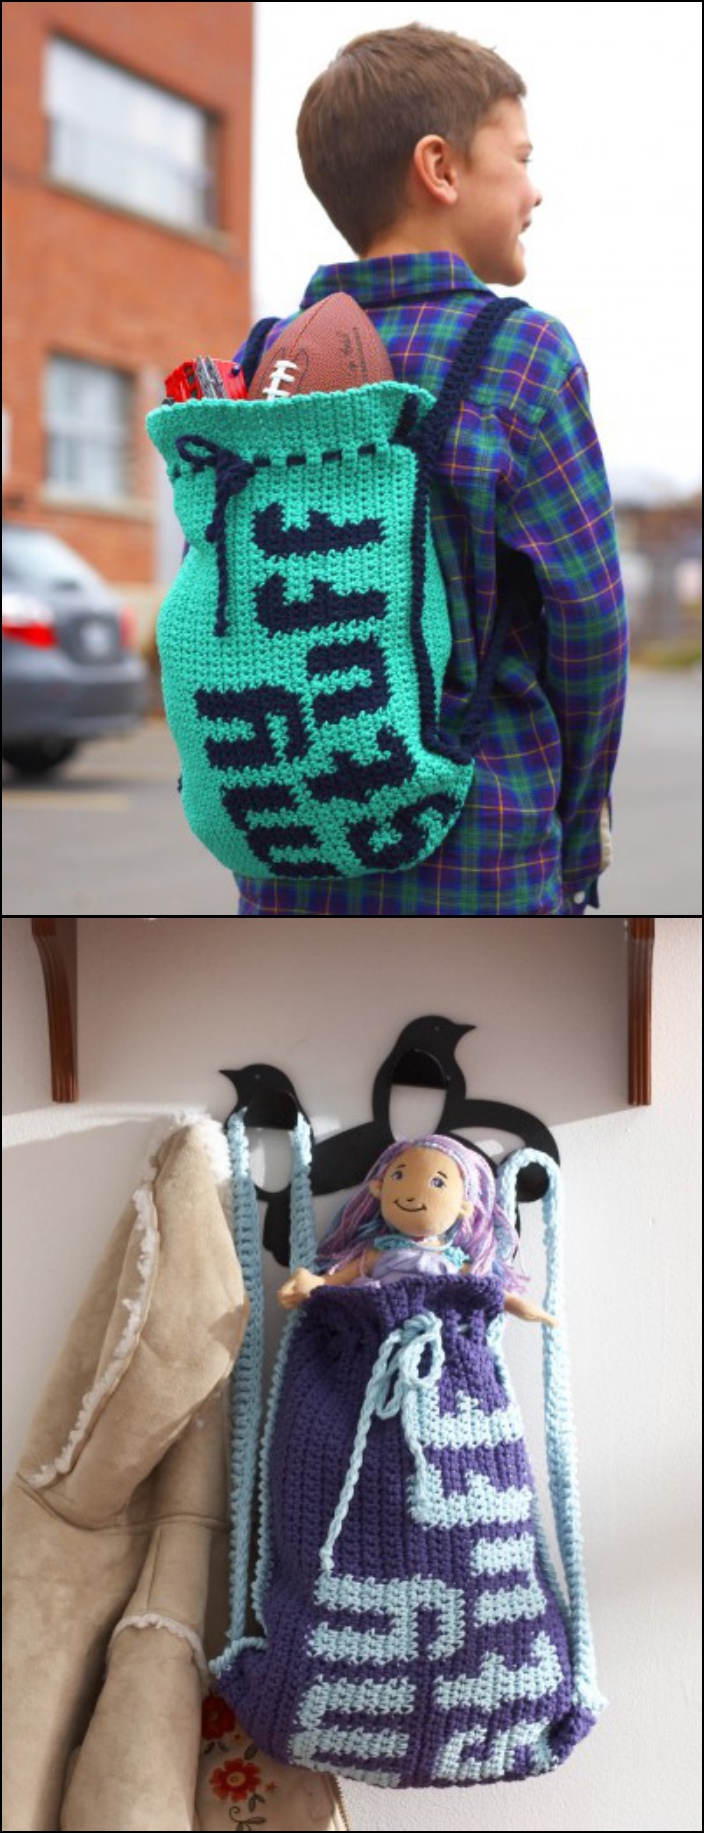 Crochet ‘My Stuff’ Drawstring Bag with Free Pattern